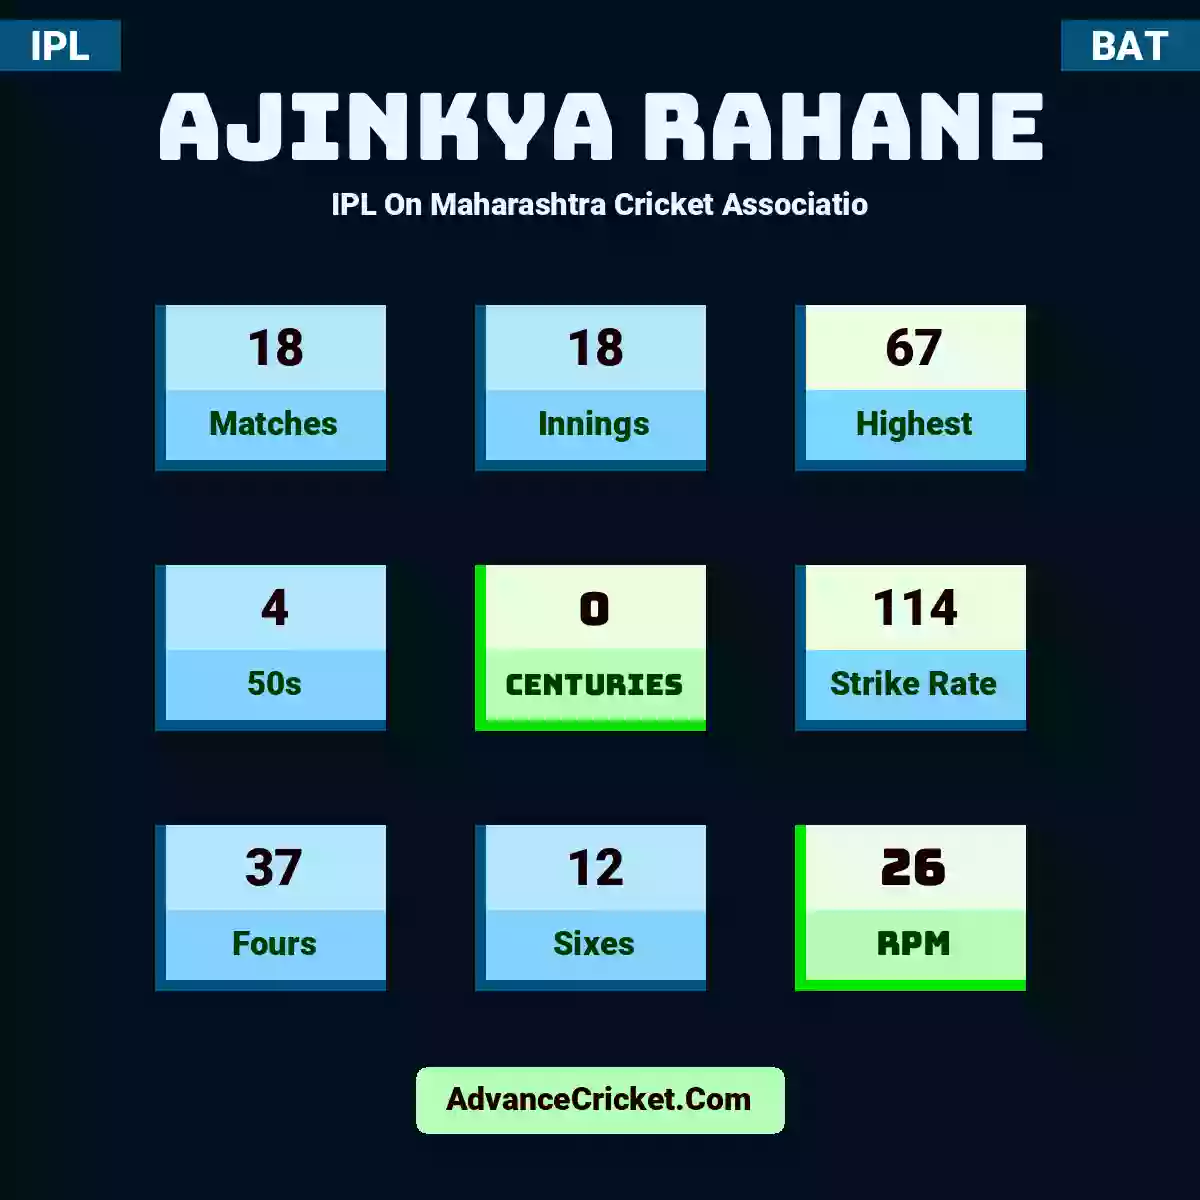 Ajinkya Rahane IPL  On Maharashtra Cricket Associatio, Ajinkya Rahane played 18 matches, scored 67 runs as highest, 4 half-centuries, and 0 centuries, with a strike rate of 114. A.Rahane hit 37 fours and 12 sixes, with an RPM of 26.